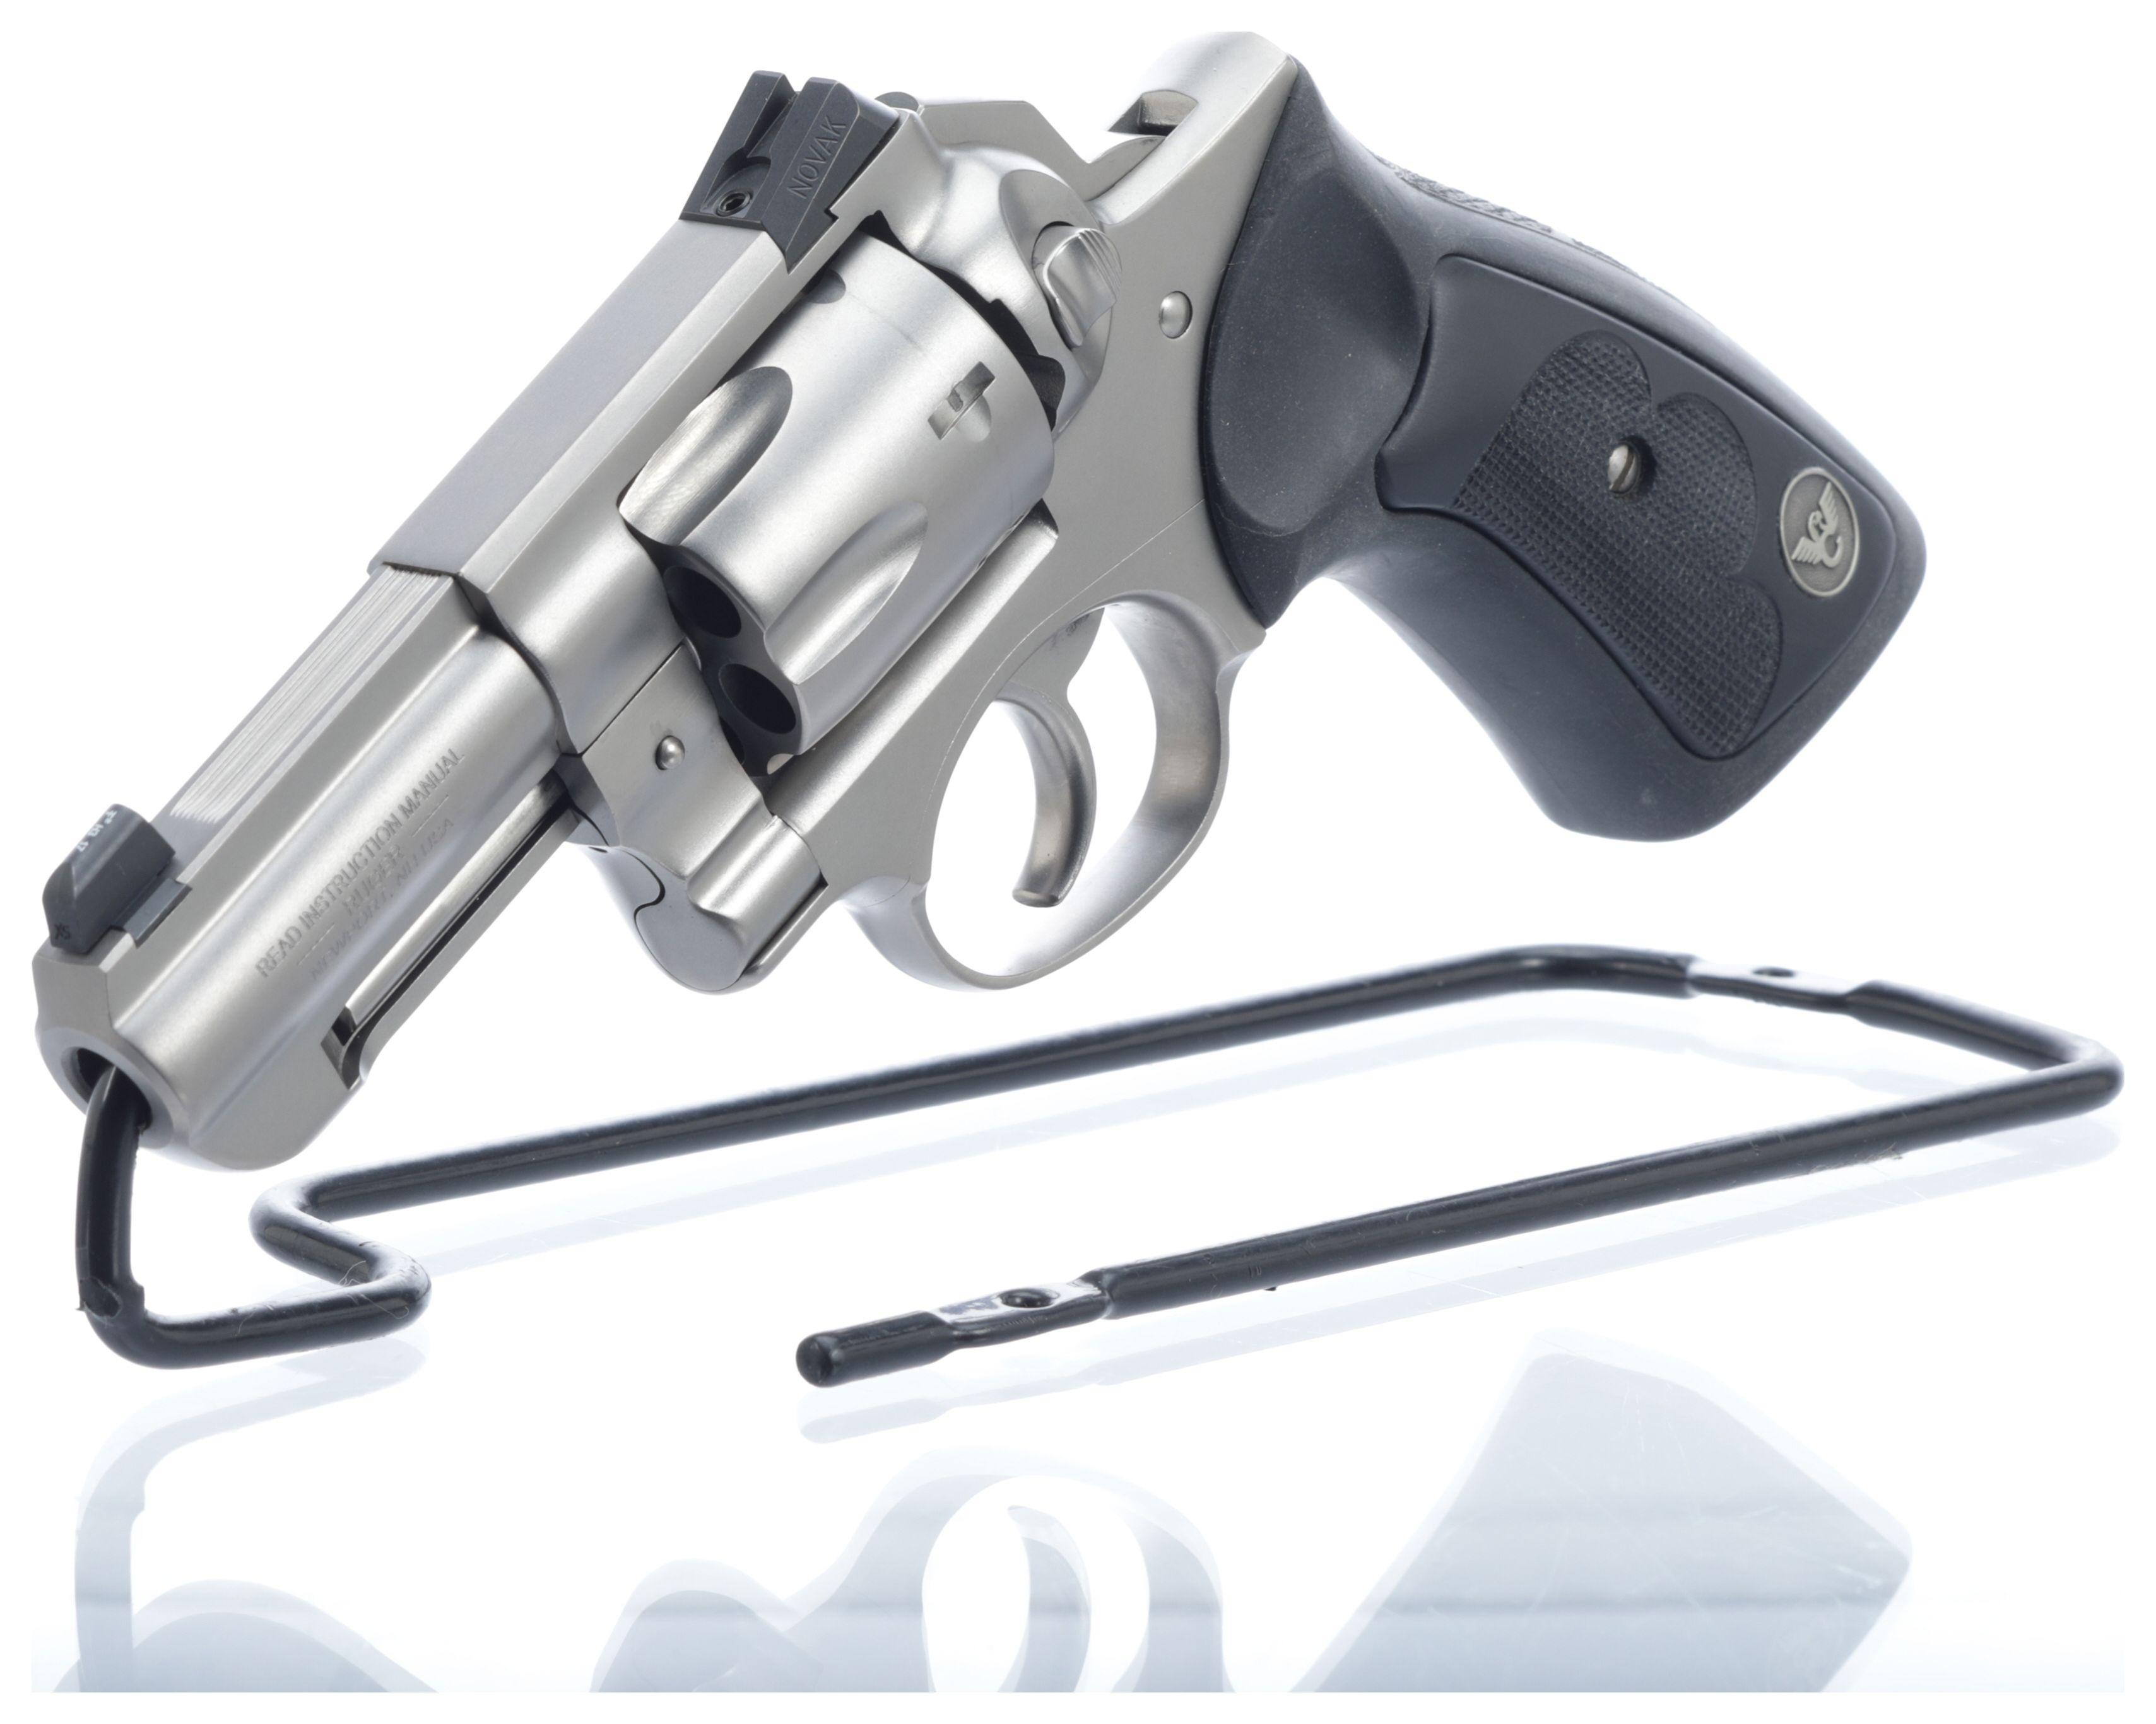 Wilson Combat/Robar Upgraded Ruger Model GP100 Revolver